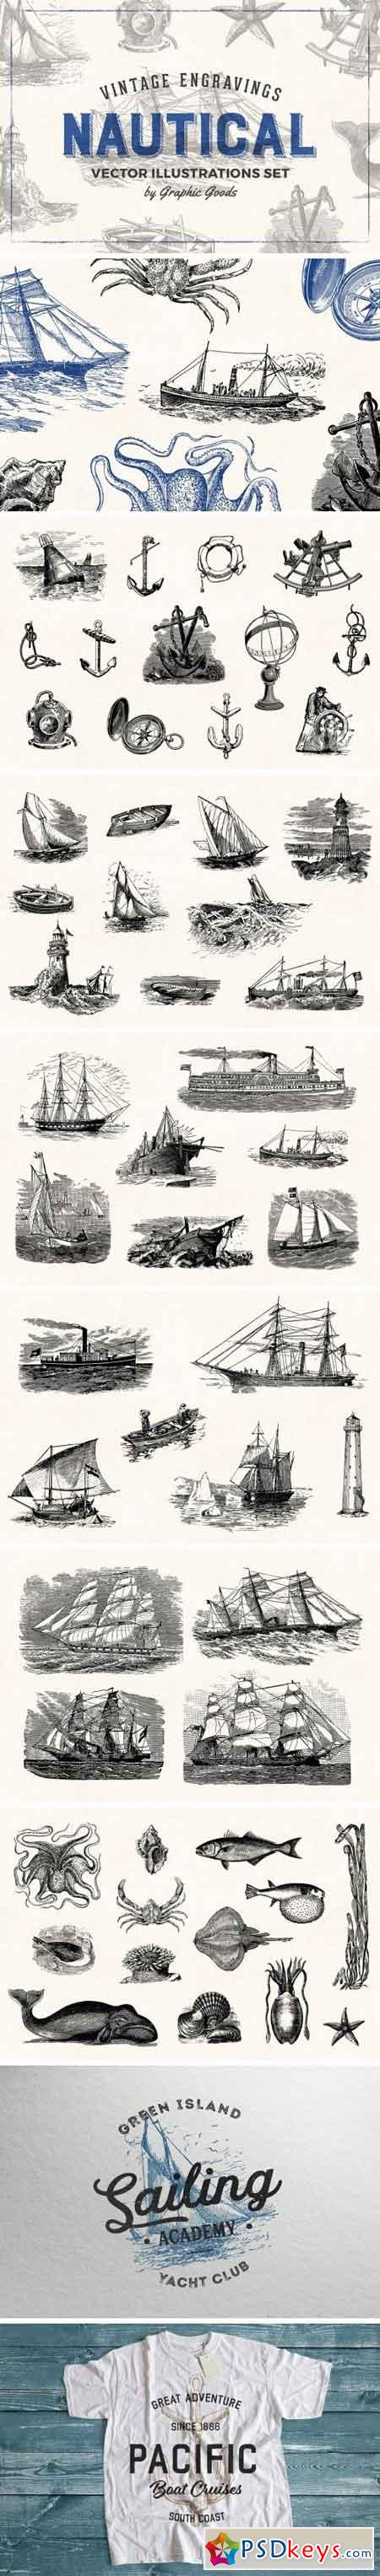 Nautical Engraving Illustrations 1461014